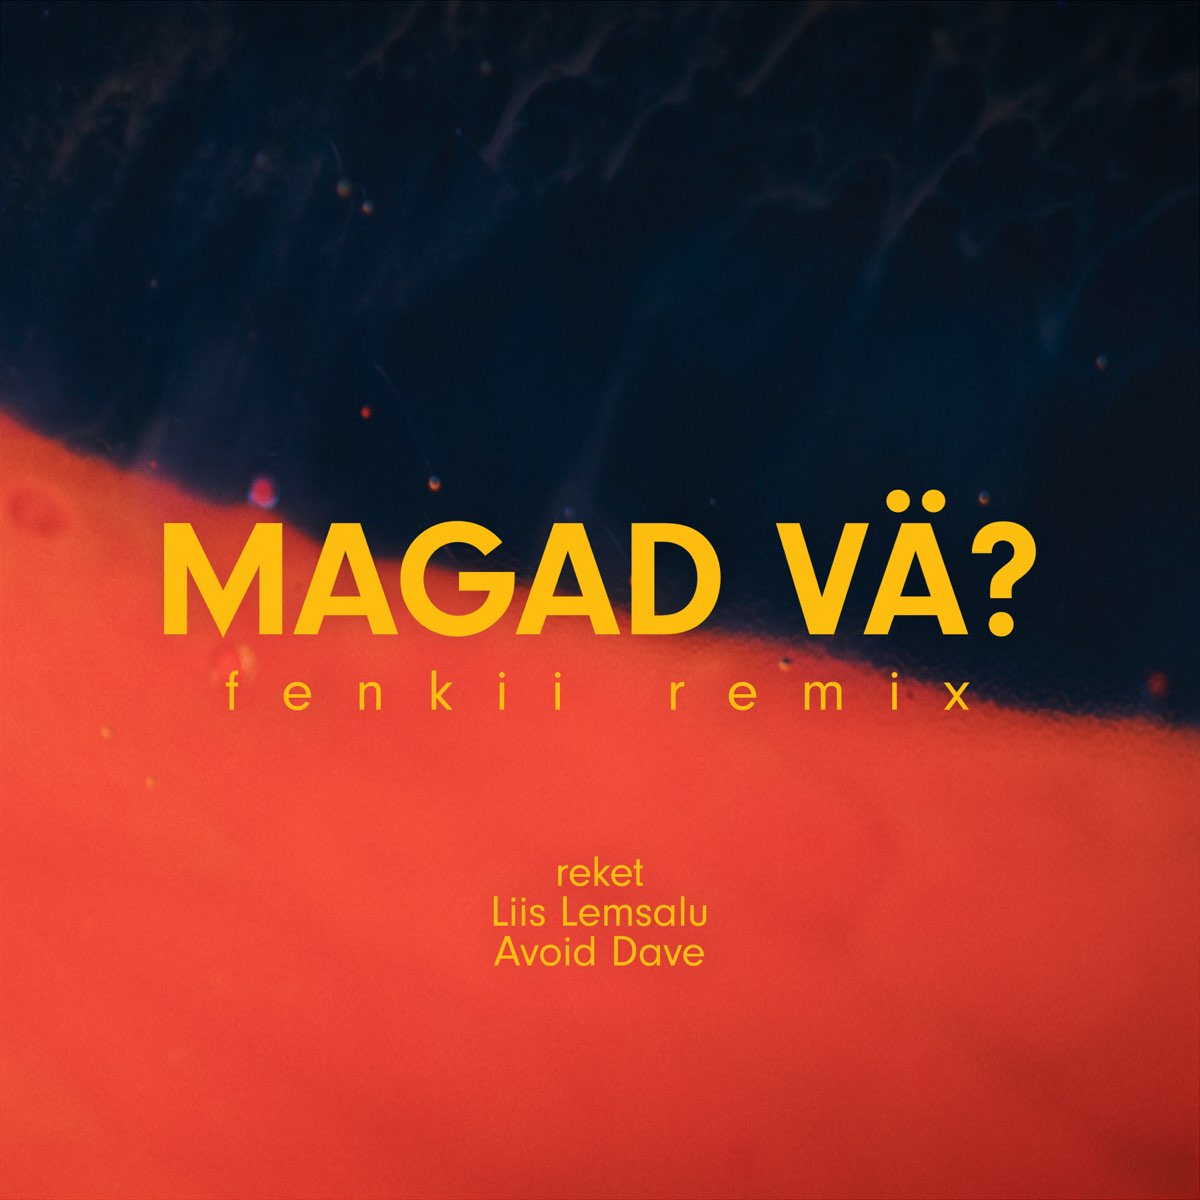 Magad vä? (fenkii remix) [feat. Liis Lemsalu & Avoid Dave] - Single by  Reket & fenkii on Apple Music